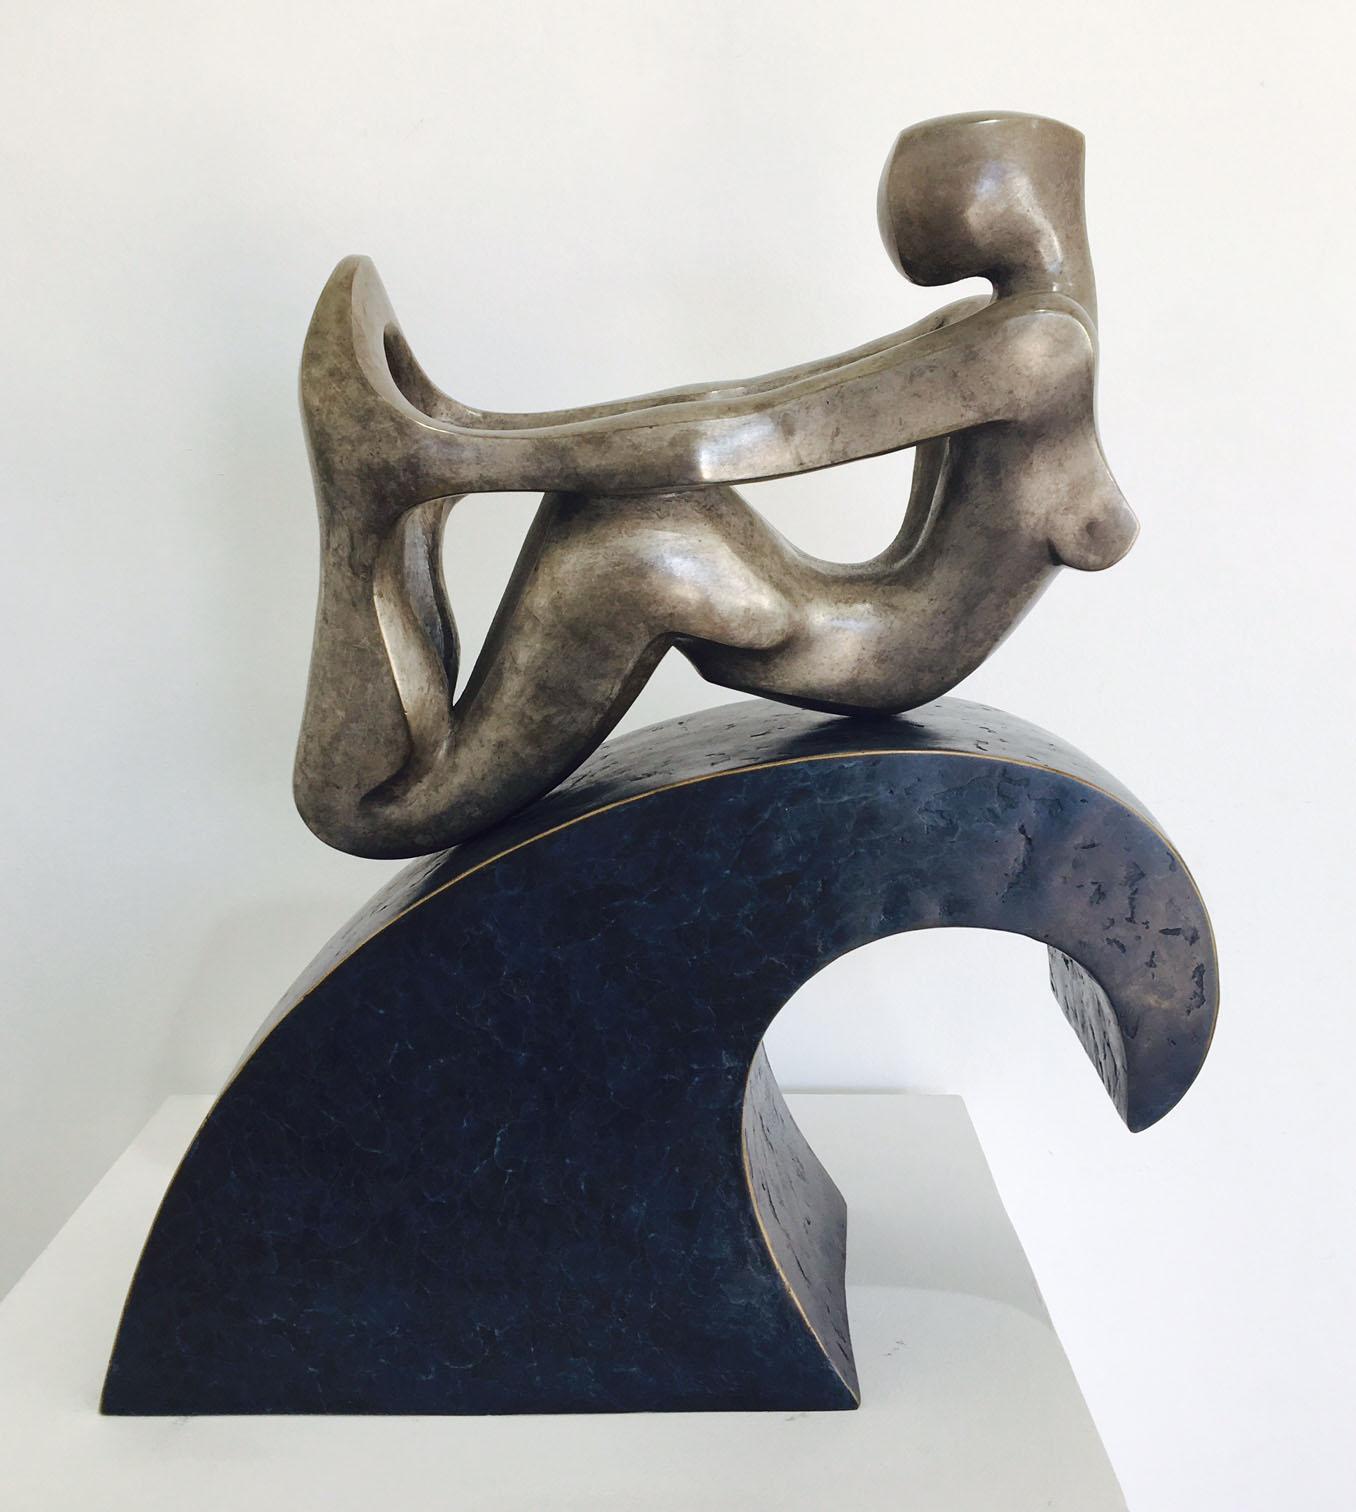 Michael Vaynman Figurative Sculpture - The Ark, Contemporary Bronze Sculpture, edition 2 of 10